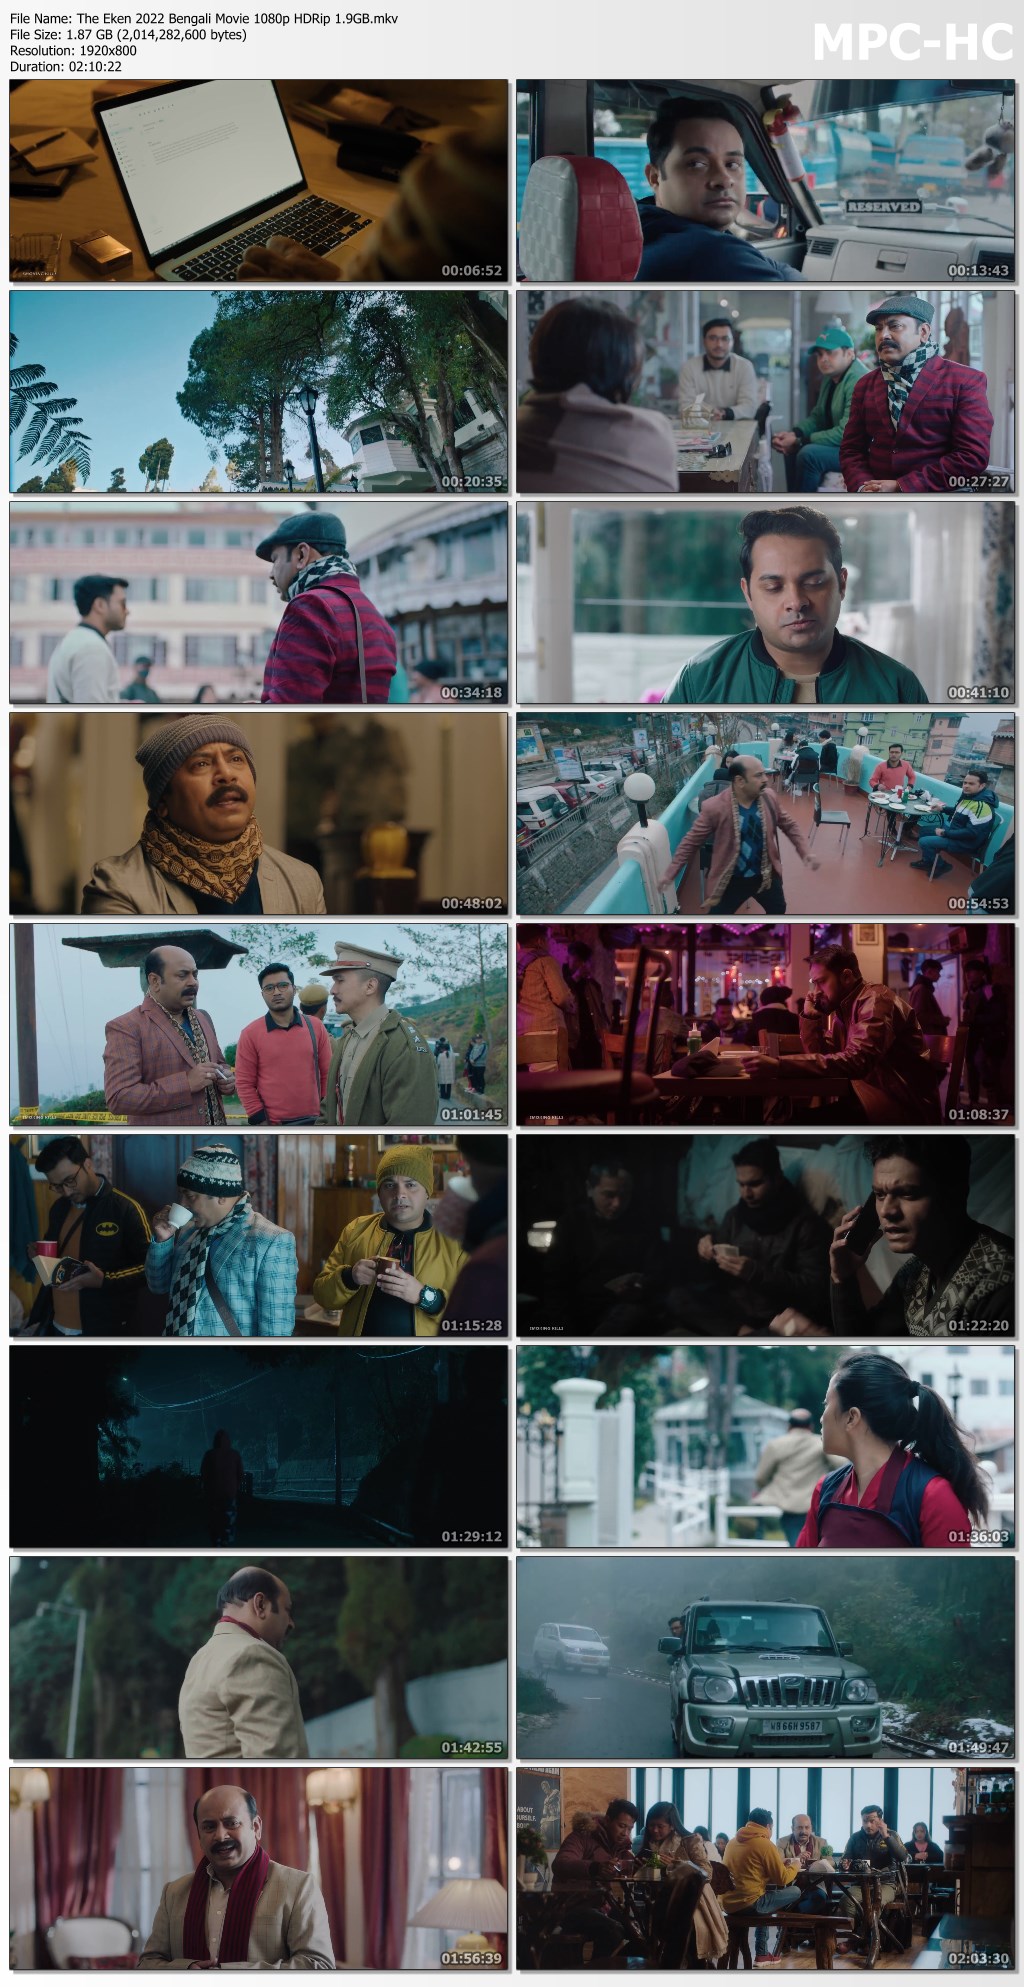 The-Eken-2022-Bengali-Movie-1080p-HDRip-1.9GB.mkv_thumbs.jpg